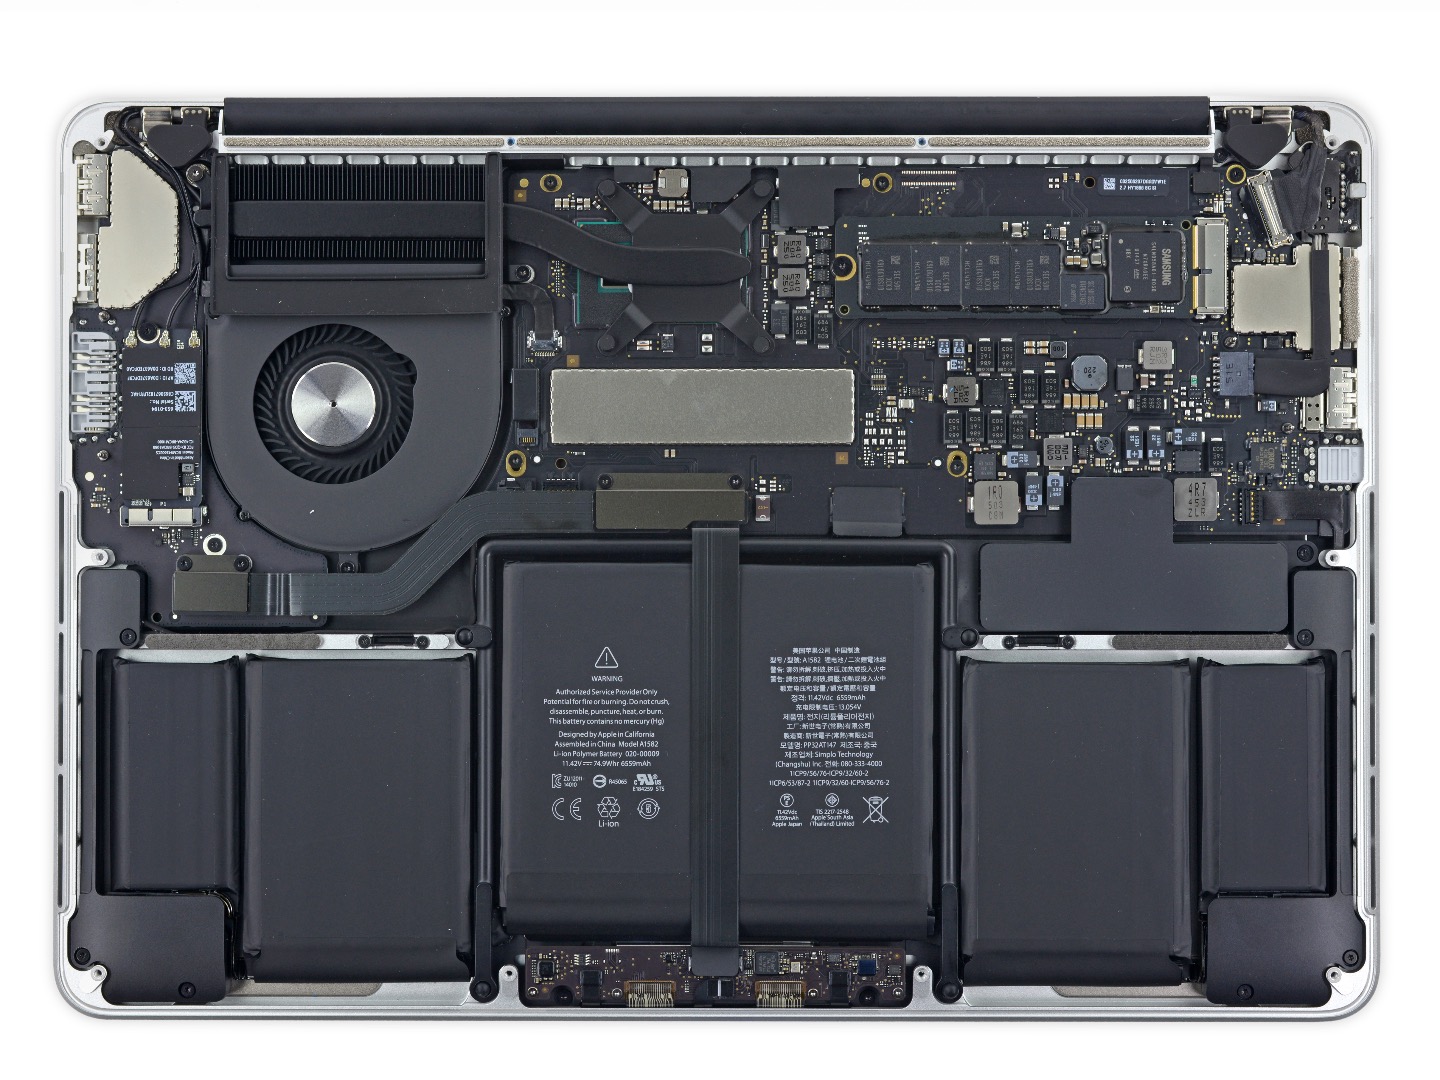 Ventilador en la parte interna de una MacBook Pro M1. (foto: Apple Support Communities)